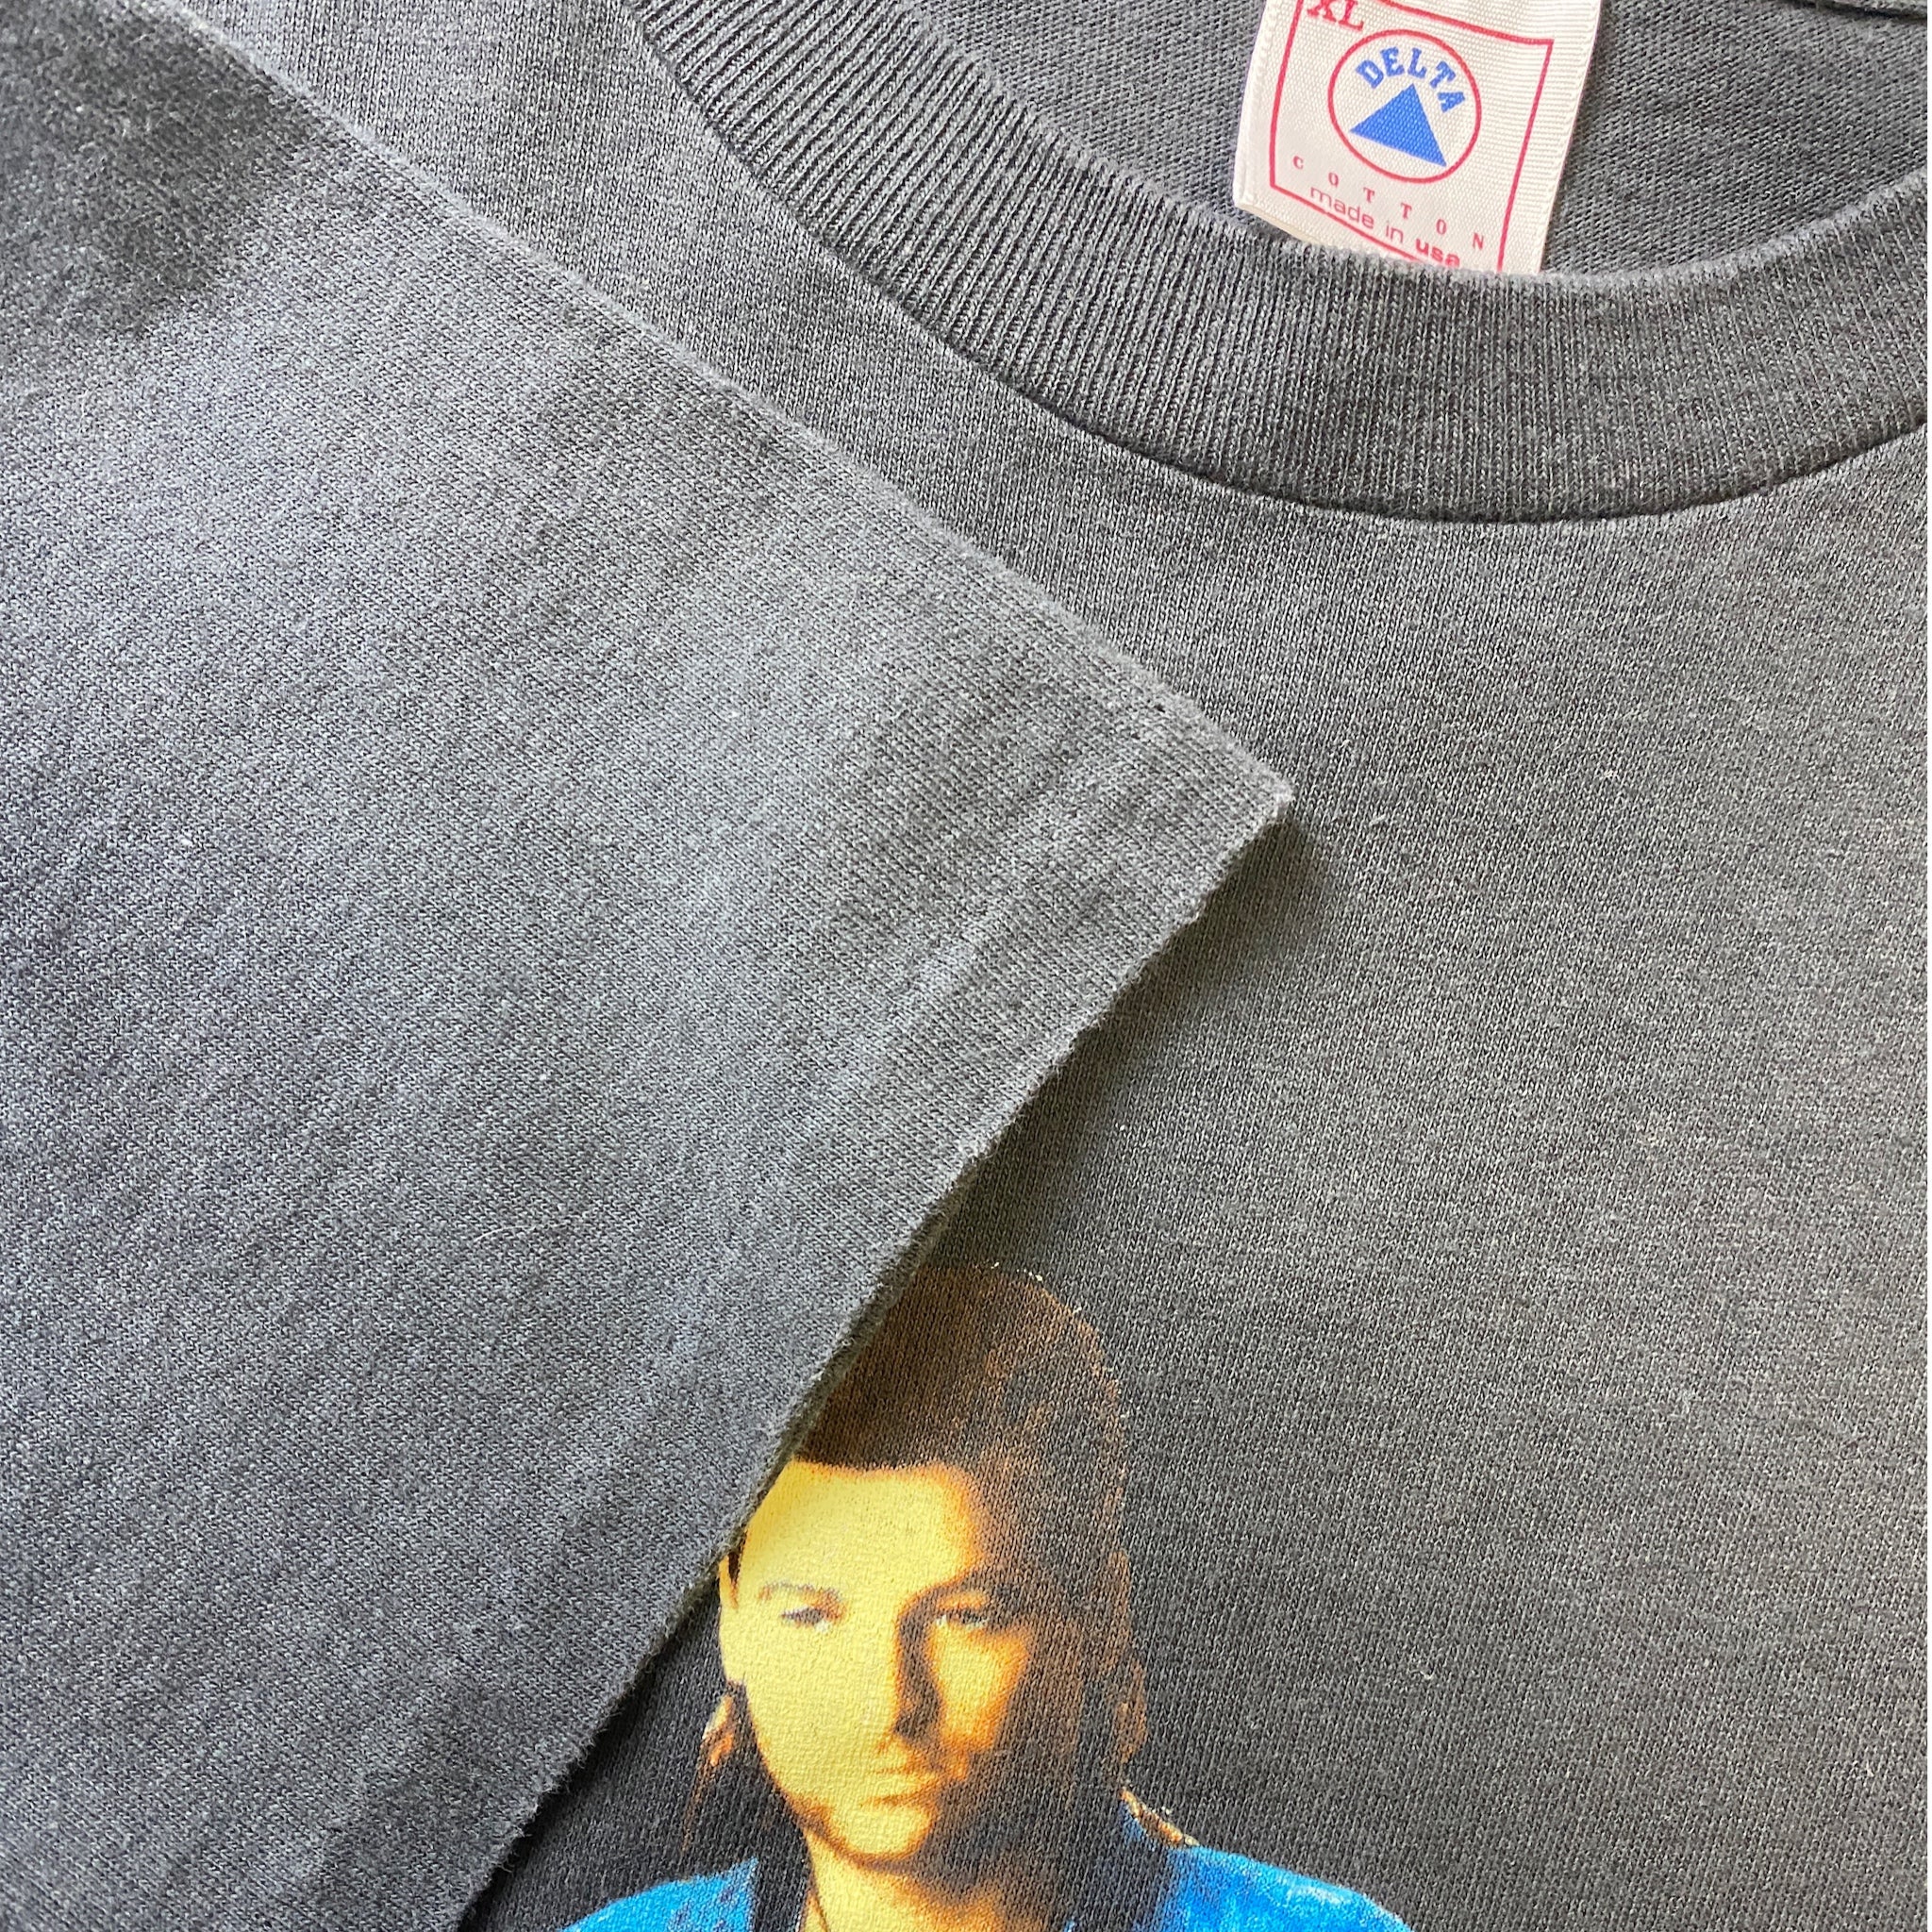 1993 Billy Ray Cyrus Vintage Shirt - Black Shirt